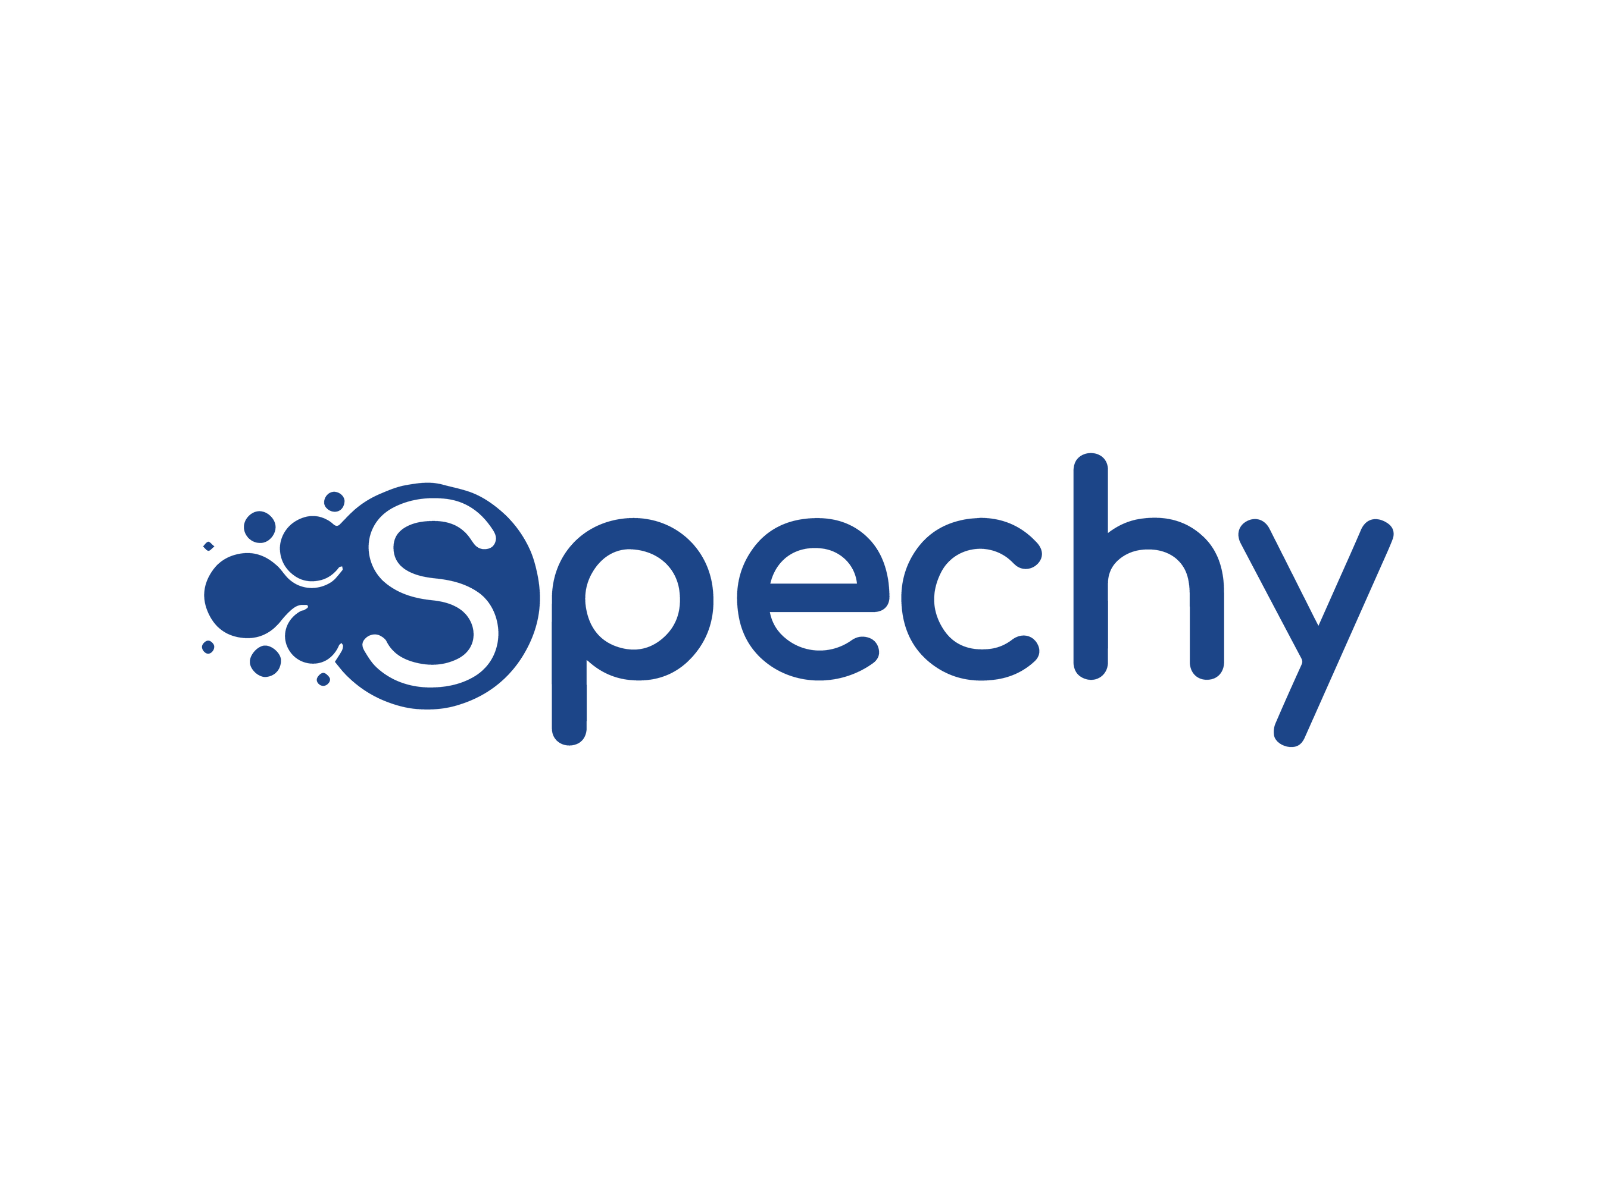 Spechy logo